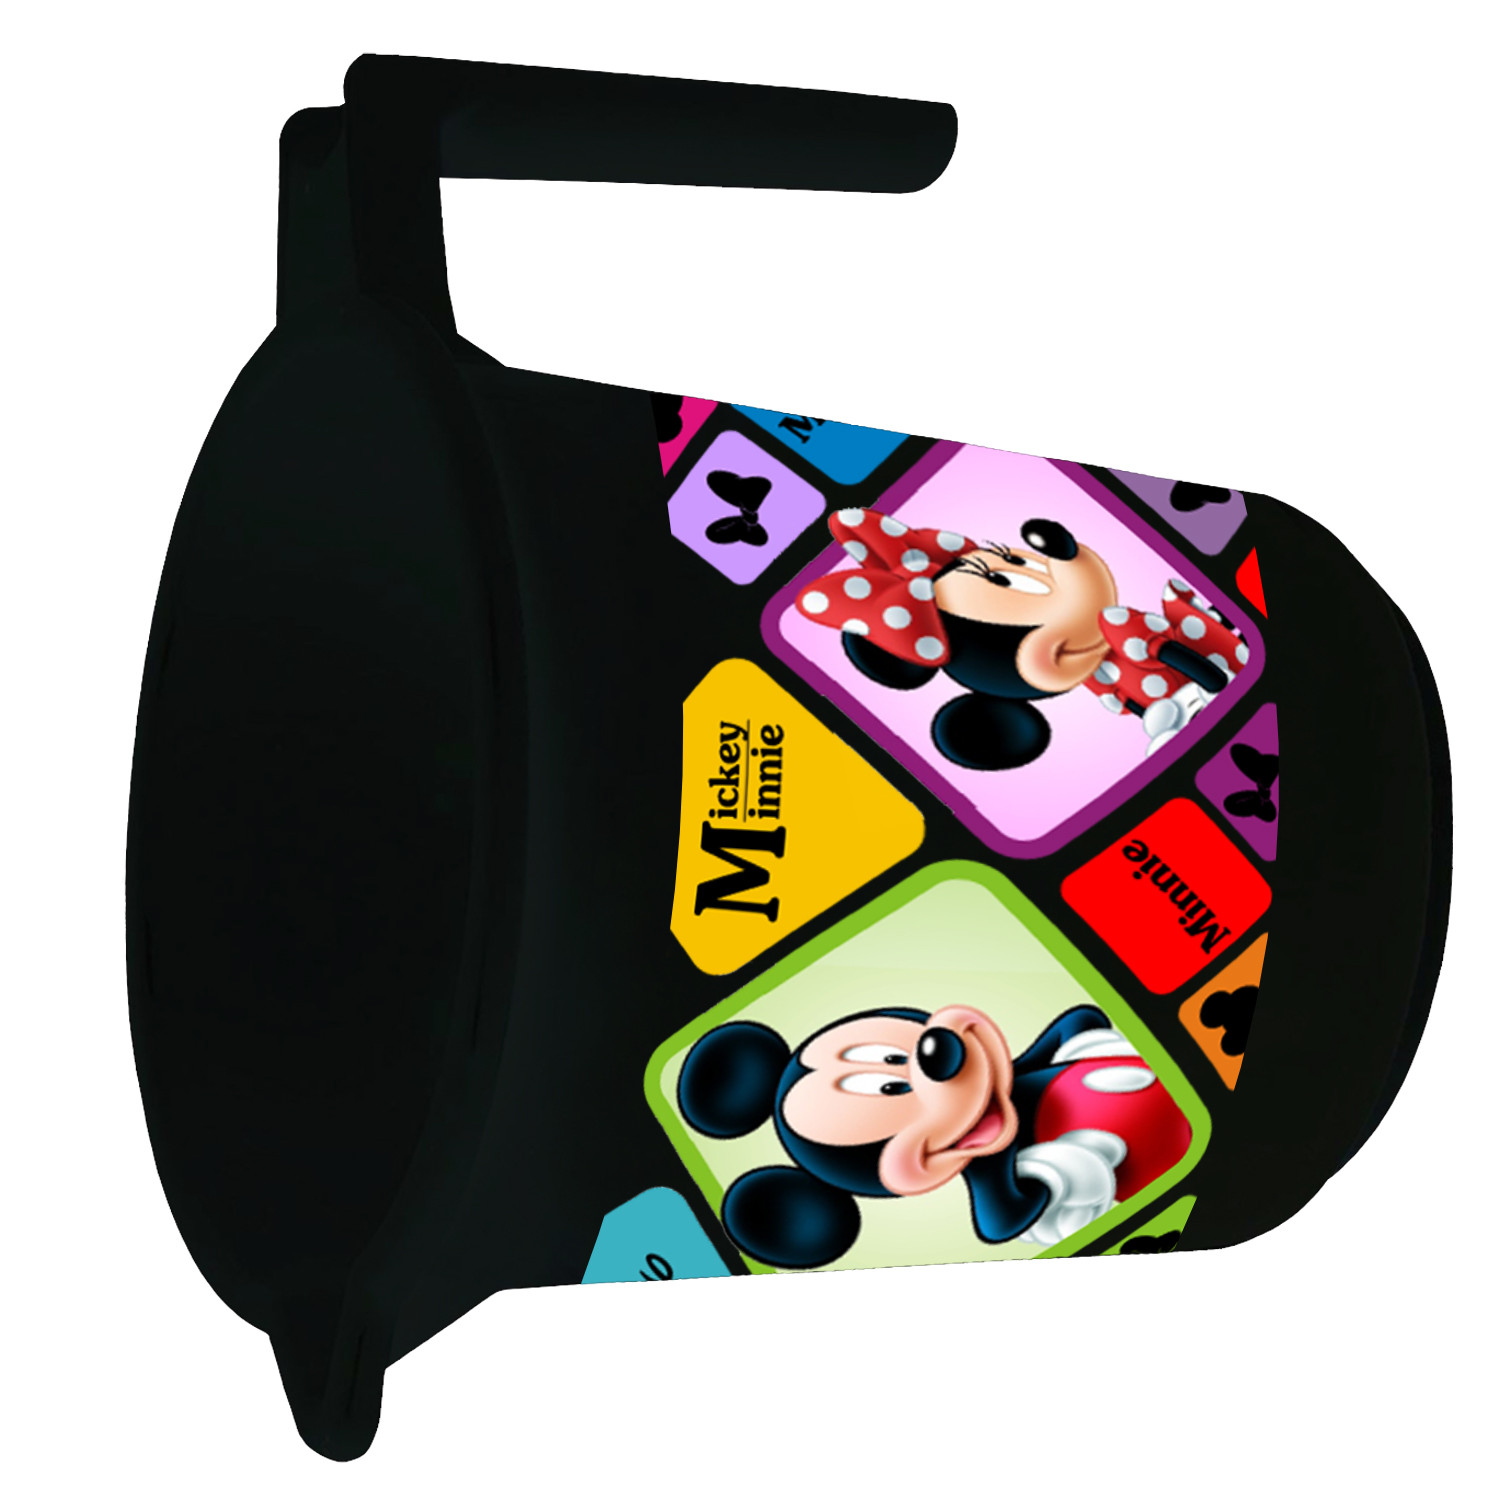 Kuber Industries Disney Mickey Minnie Print 8 Pieces Unbreakable Strong Plastic Bathroom Mug,500 ML (Black & White) -HS_35_KUBMART17647